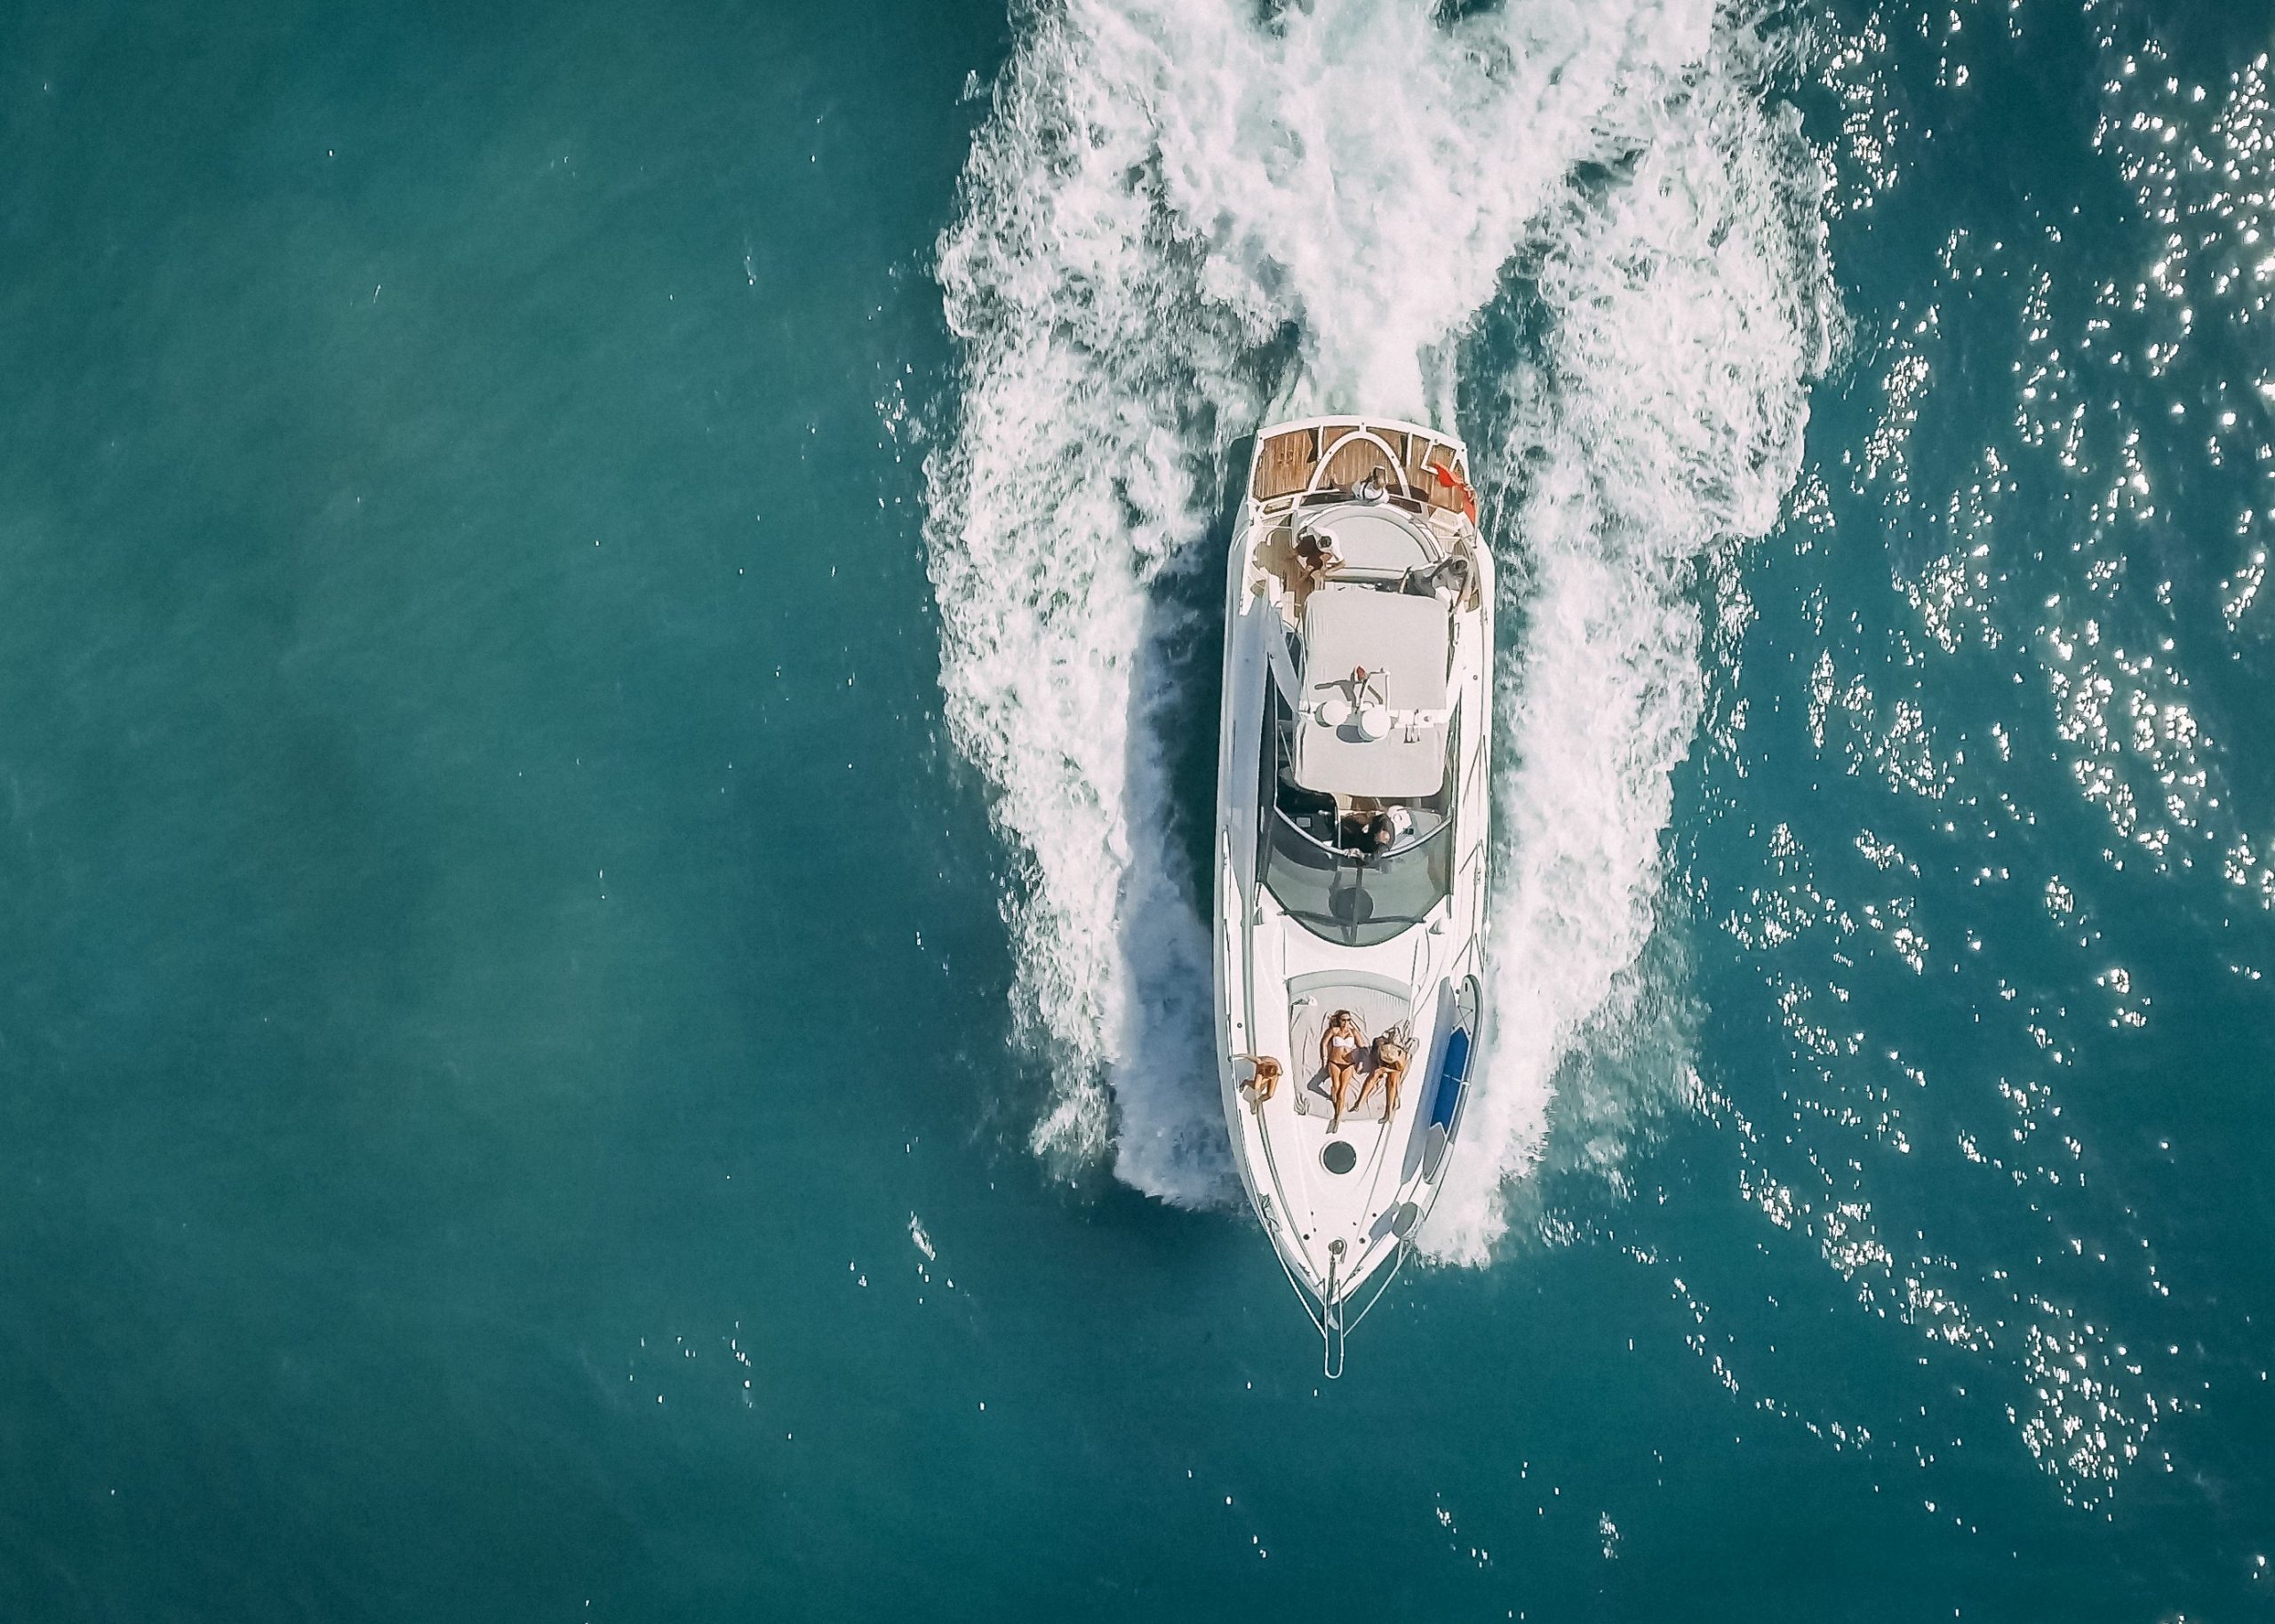 sunseeker Portofino yacht 53 ft vilamoura boat charter algarve 1 algarve luxury concierge aluguer barco 7.5 2